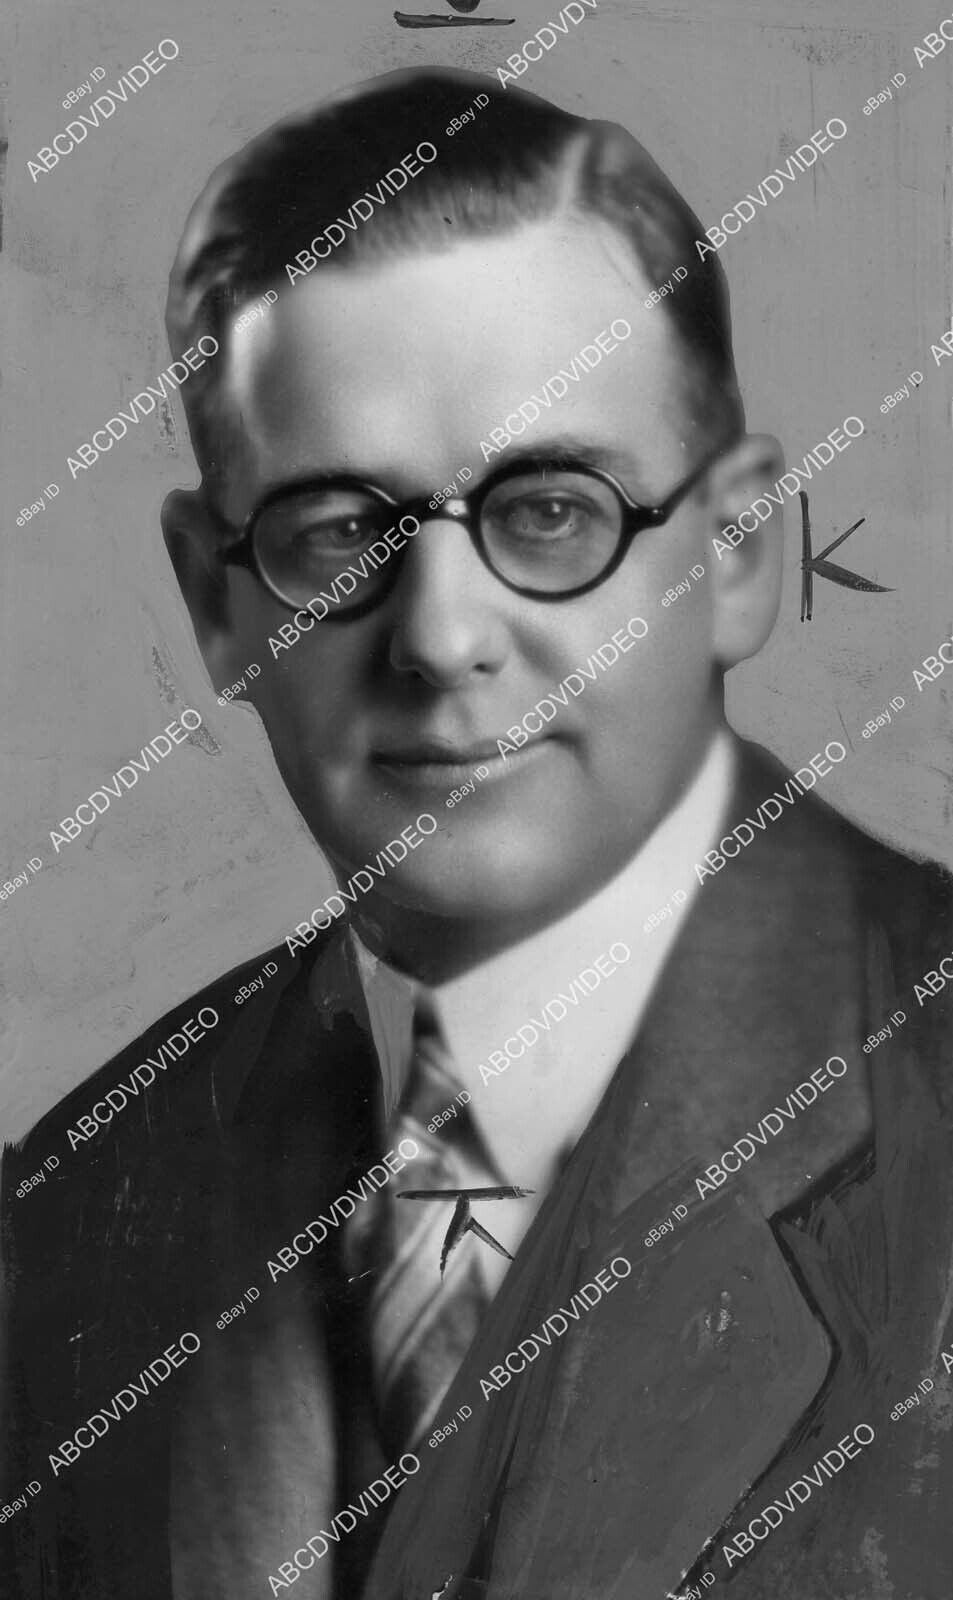 crp-34029 1921 religion evangelist Dr Harry O Anderson crp-34029